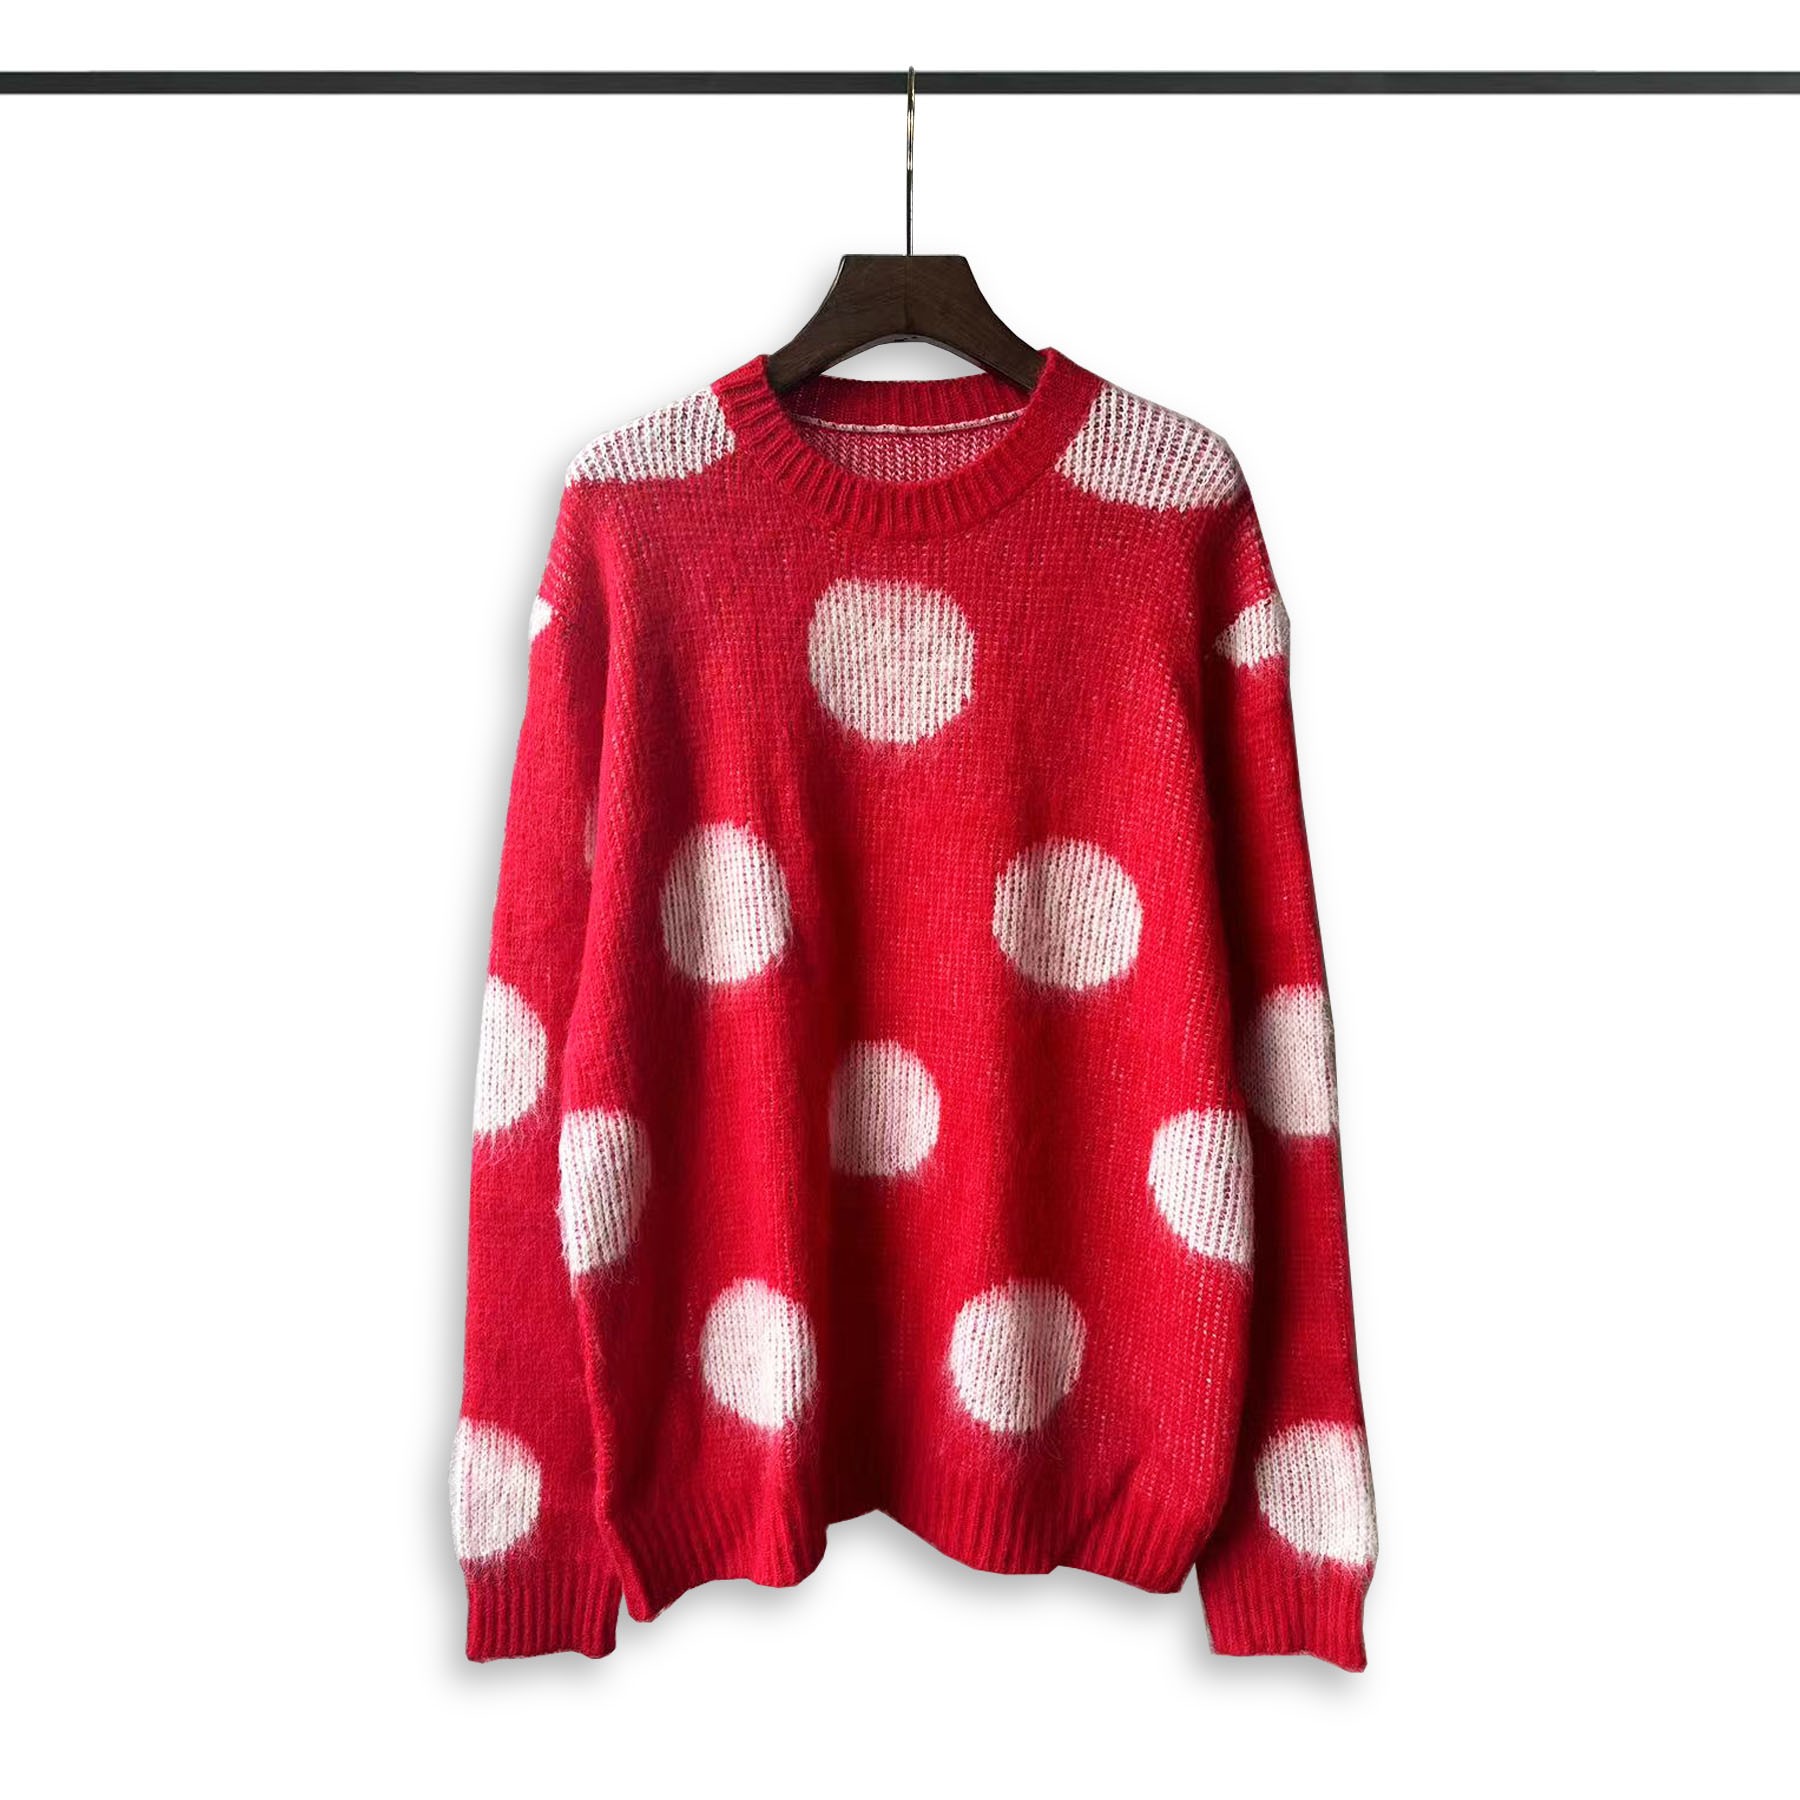 Marni Clothing Knit Sweater Sweatshirts Red Knitting Fall/Winter Collection